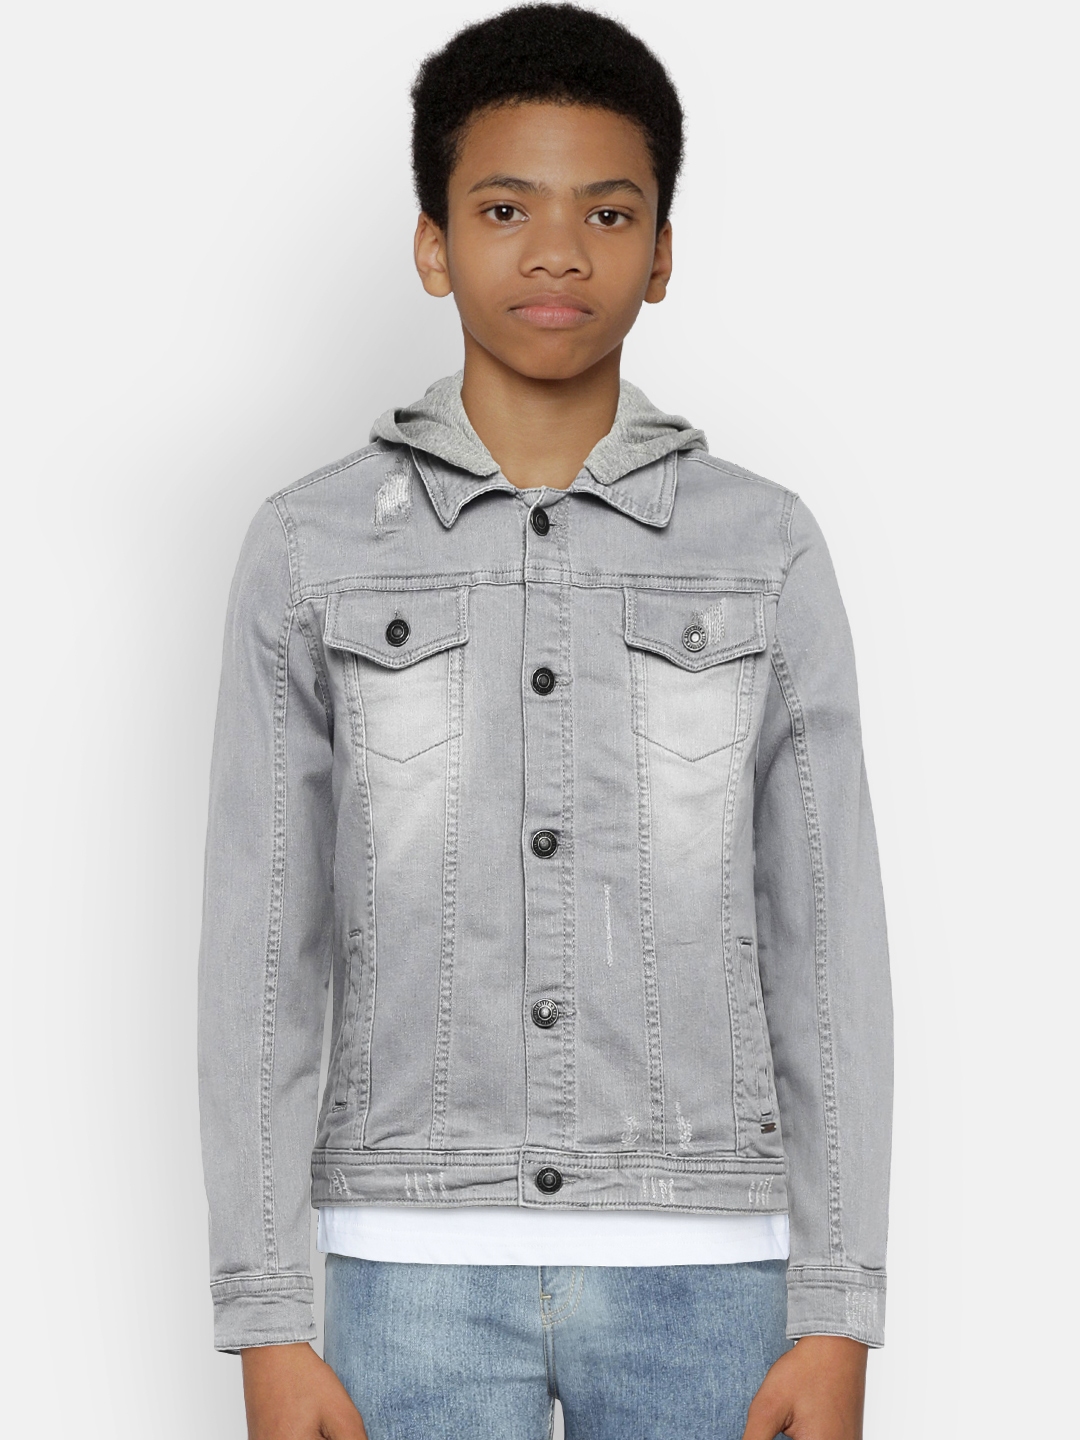 Buy Lee Cooper Boys Grey Solid Denim Jacket - Jackets for Boys 7821091 ...